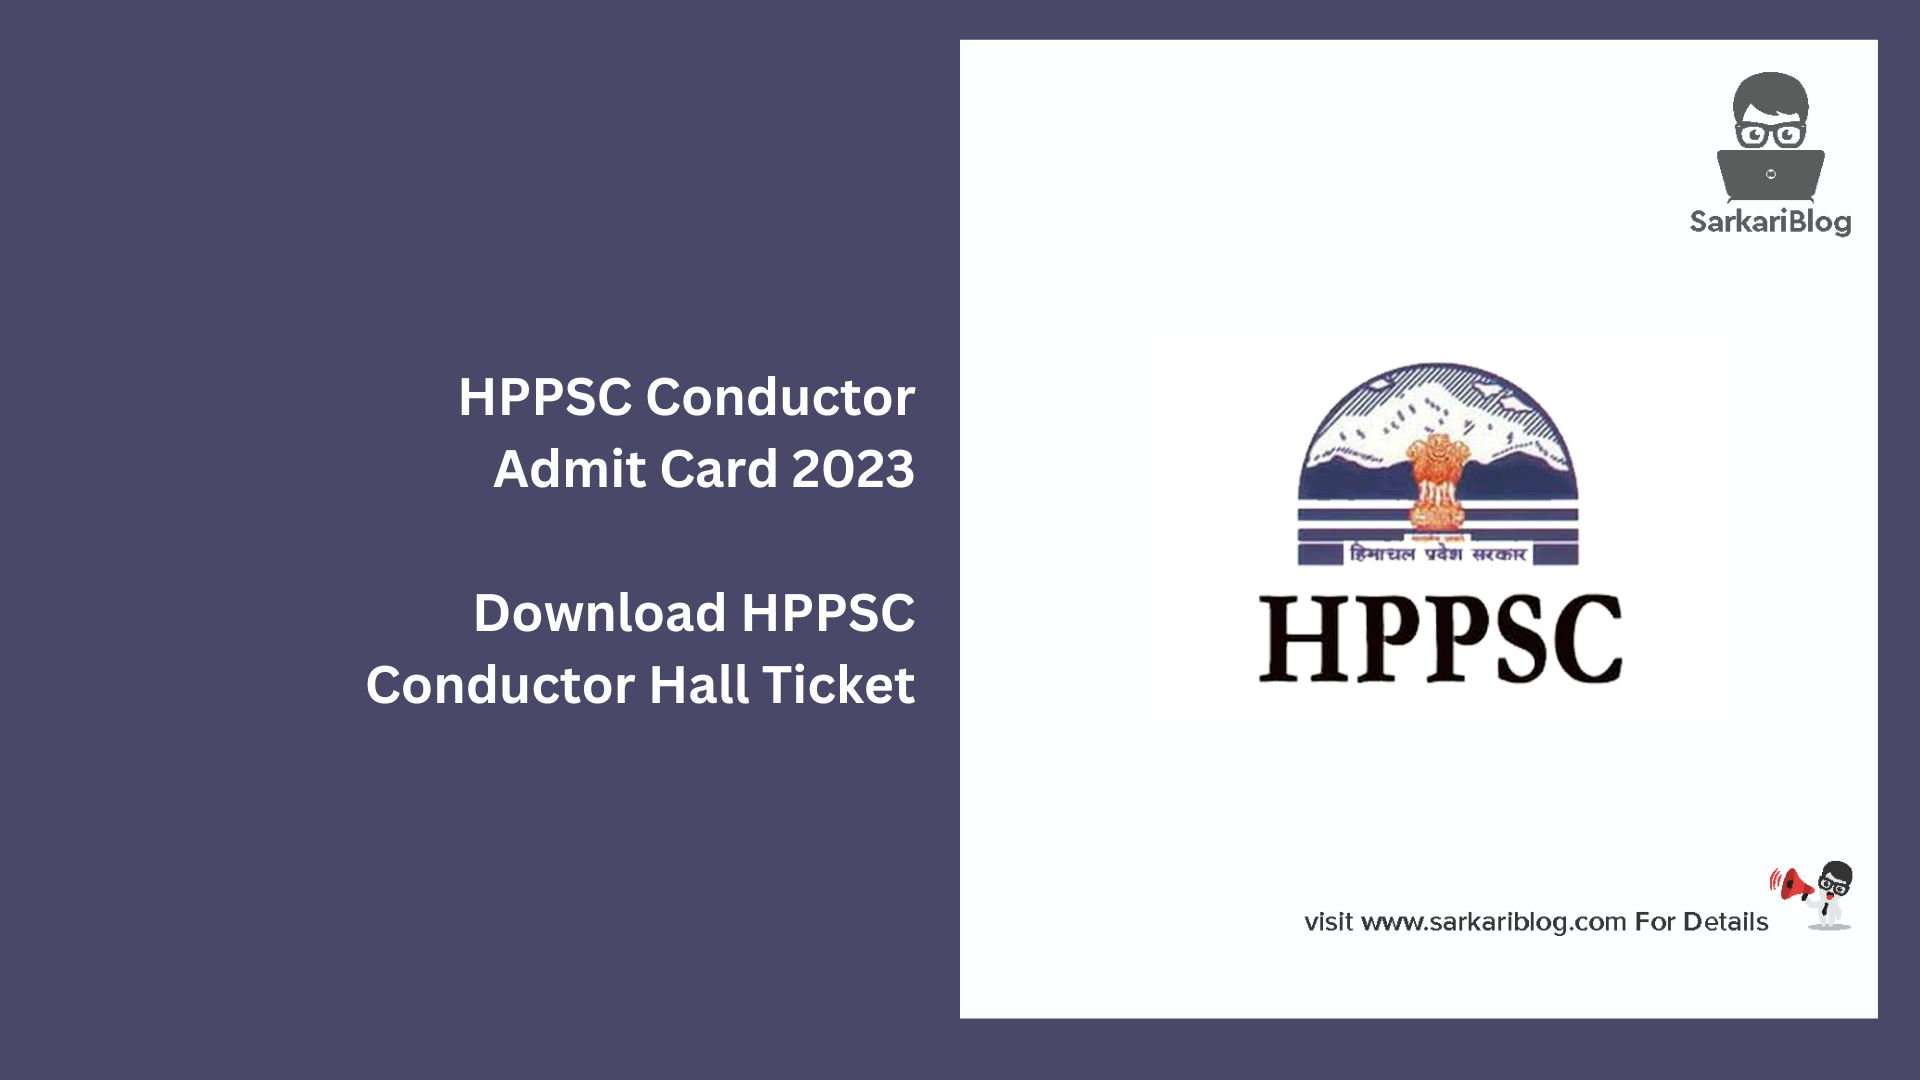 HPPSC Admit Card 2023